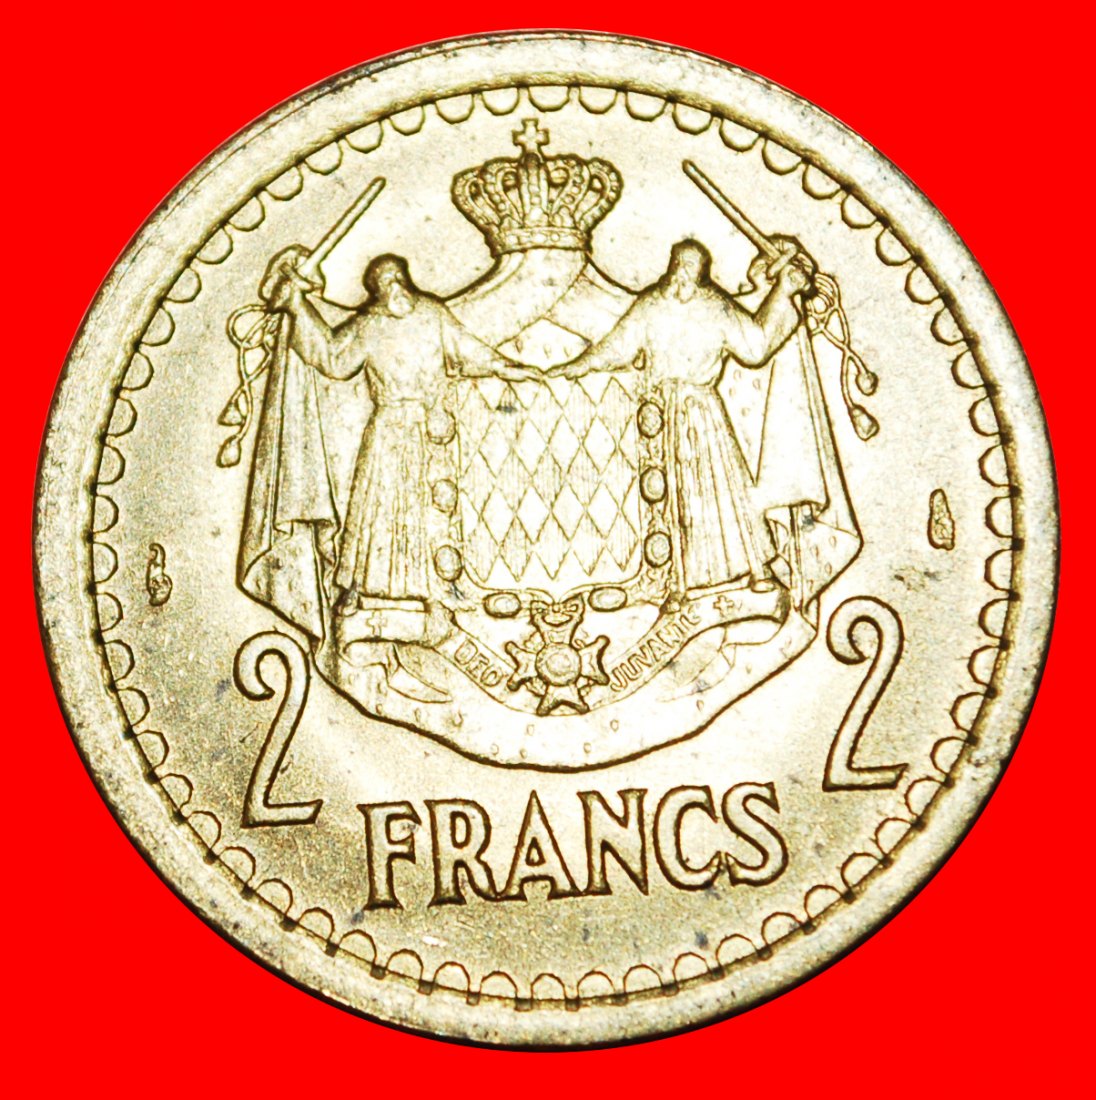  • FRANCE: MONACO ★ 2 FRANCS (1945) MINT LUSTER! LOW START ★ NO RESERVE!   